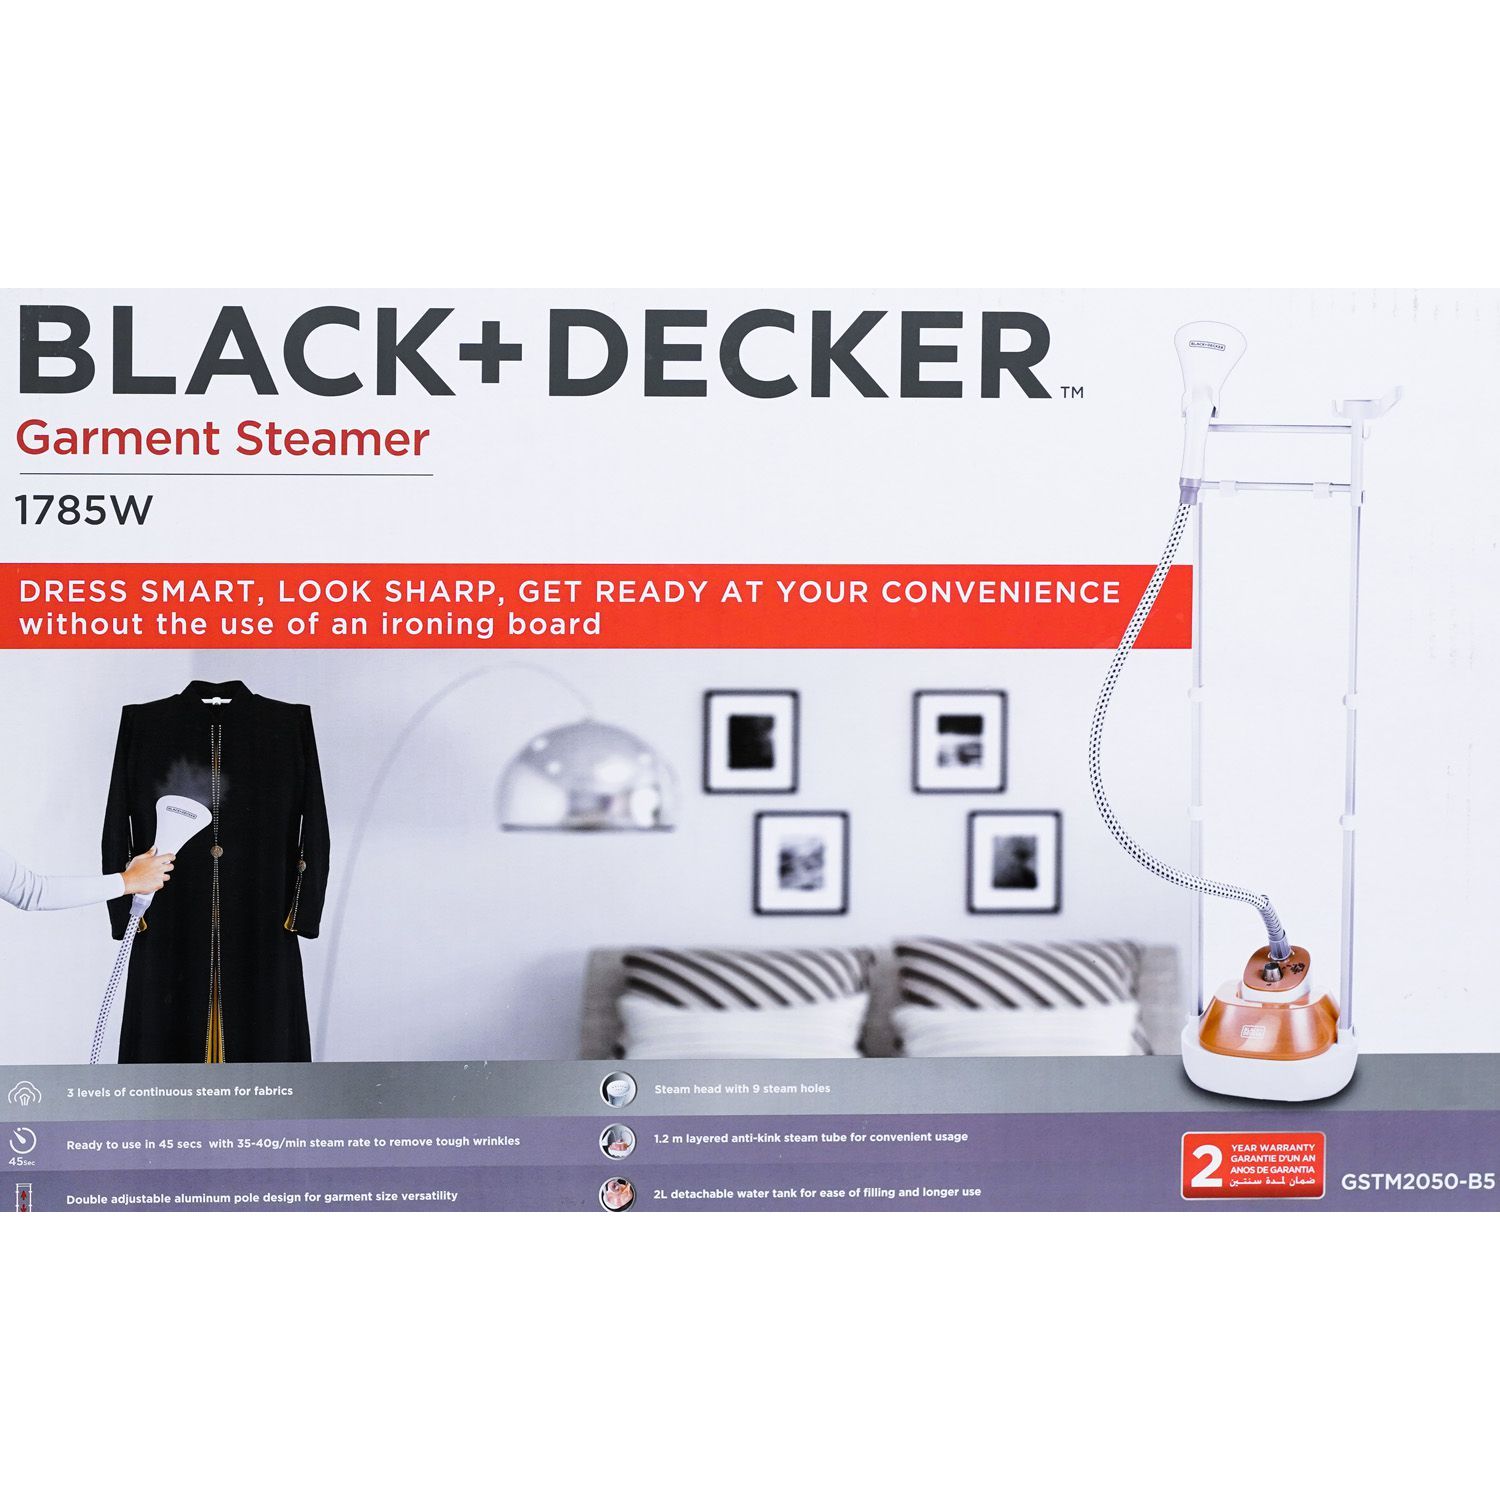 Unboxing the Black & Decker Garment Steamer - Naheed.pk 